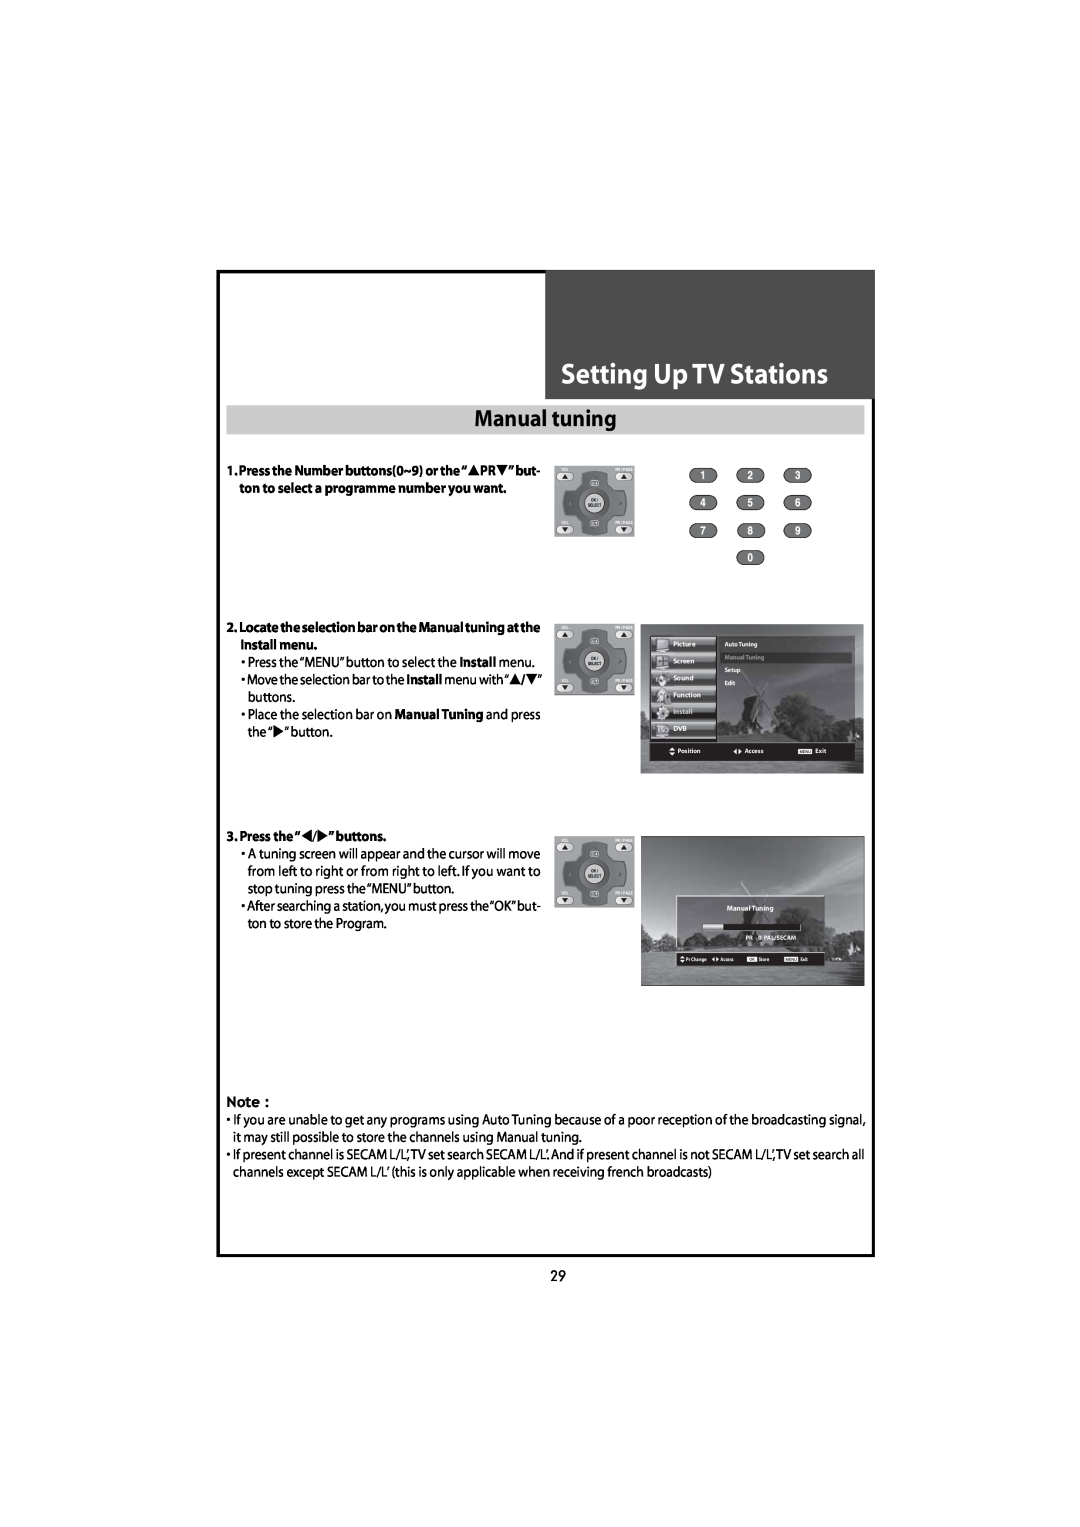 Daewoo DLT-46U1FH, DLT-42U1/G1FH, DLT-46U1HZ, DLT-42U1/G1HZ instruction manual Manual tuning, Setting UpTV Stations 